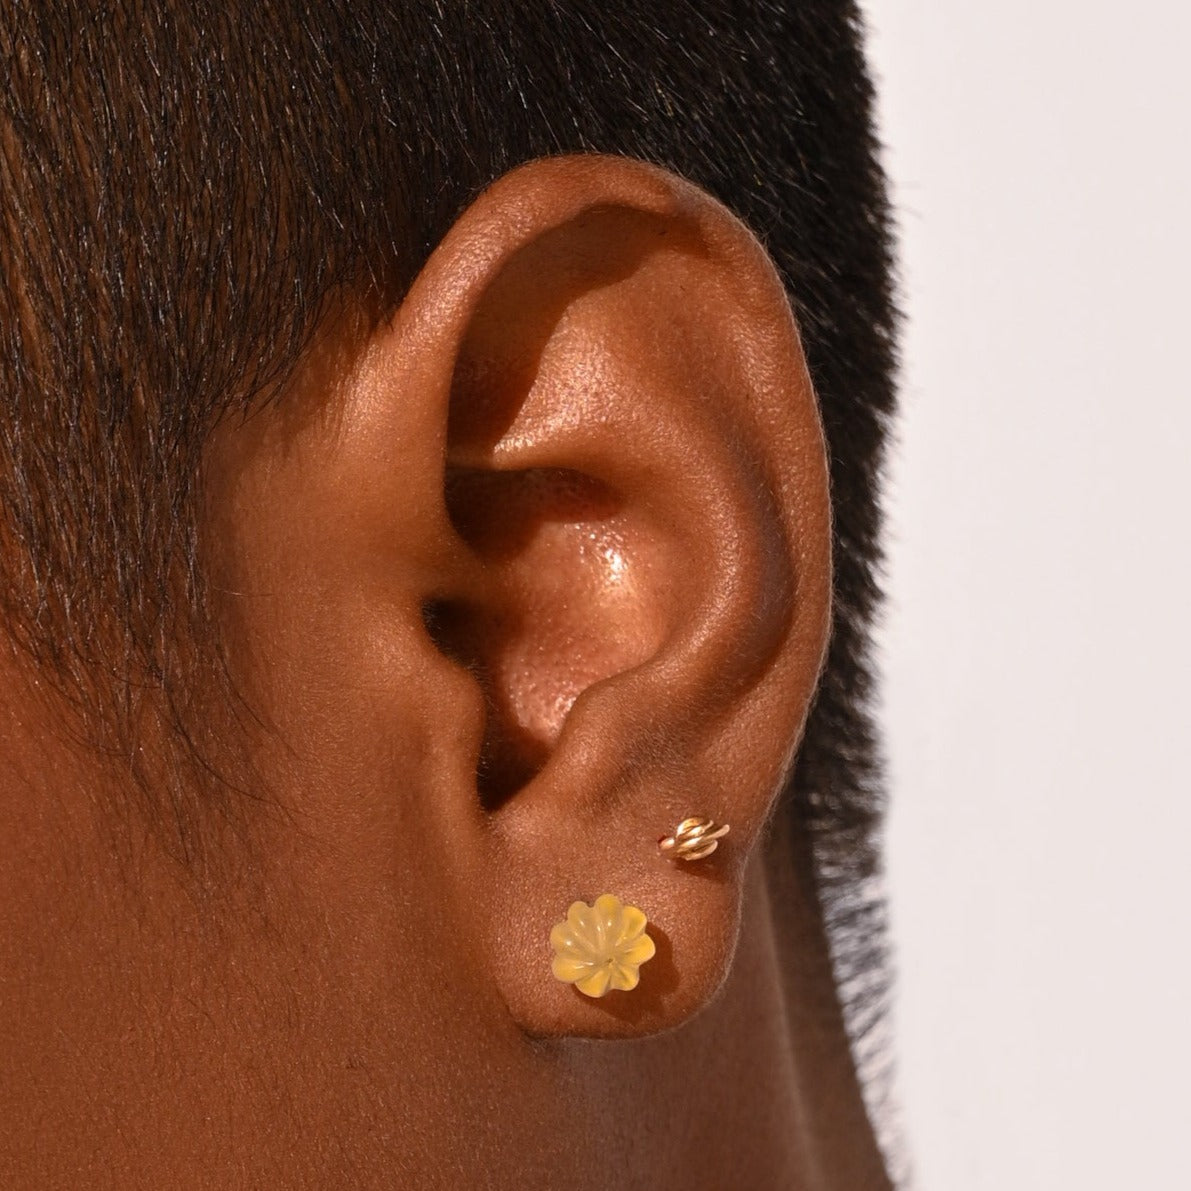 Solitario Earrings #2 (7mm) - Phrinite Earrings TARBAY   